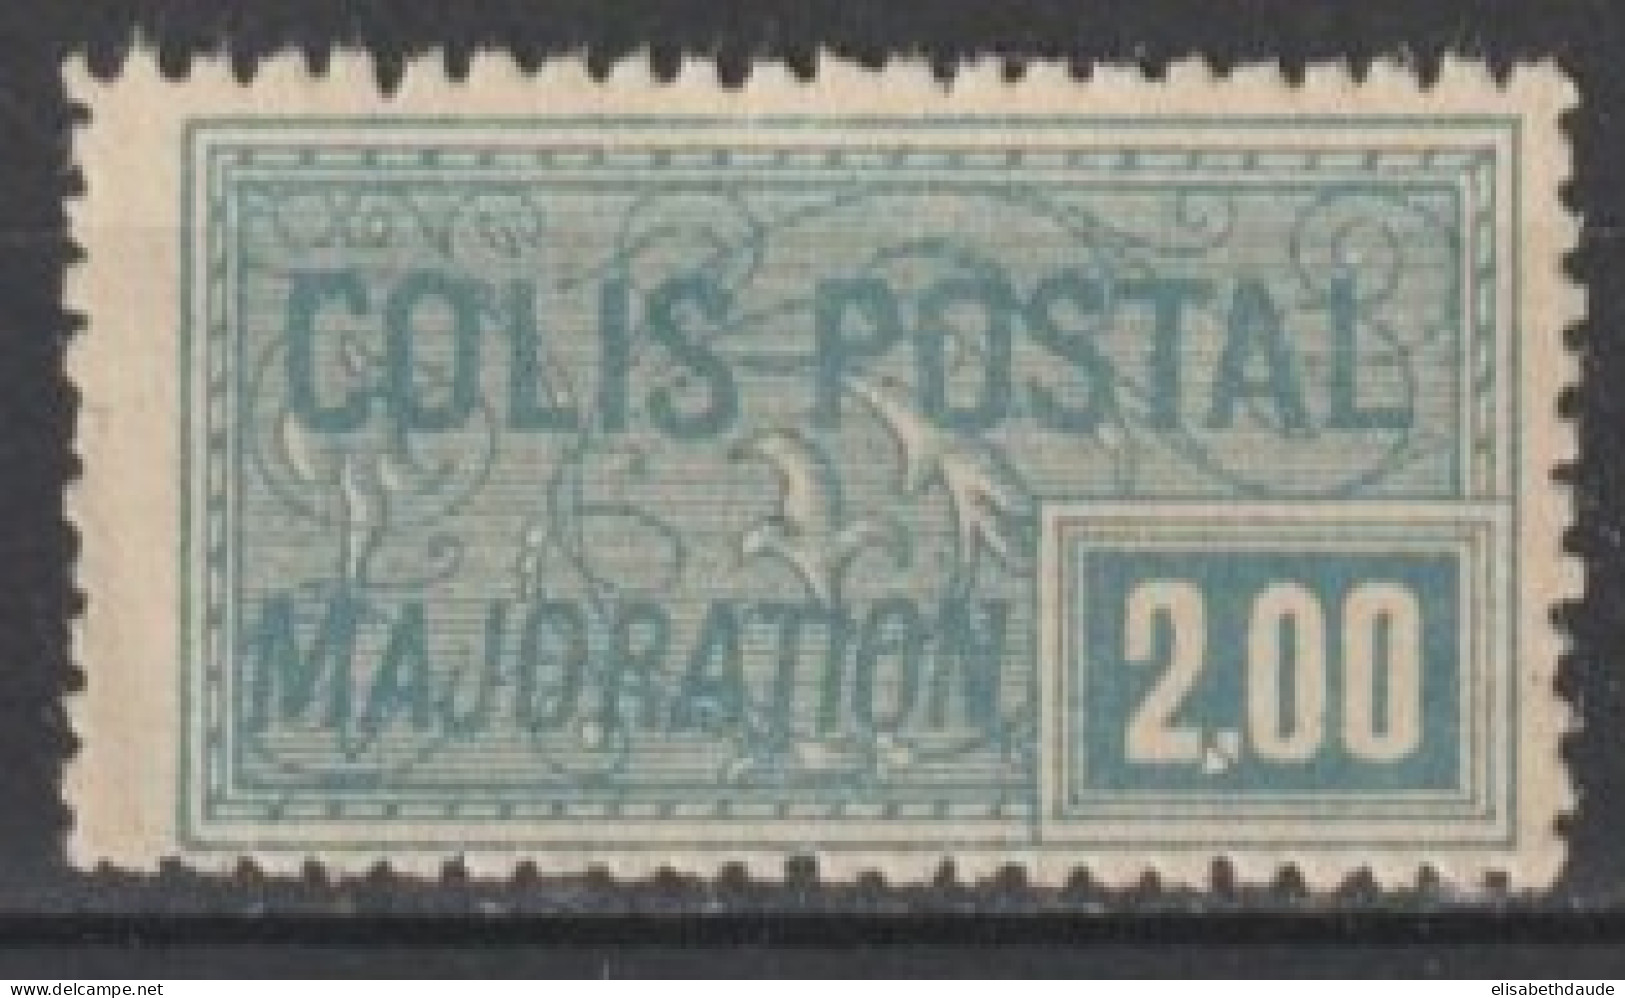 COLIS POSTAUX - 1926 - YVERT N° 79 * MLH - COTE = 35 EUR. - Nuevos